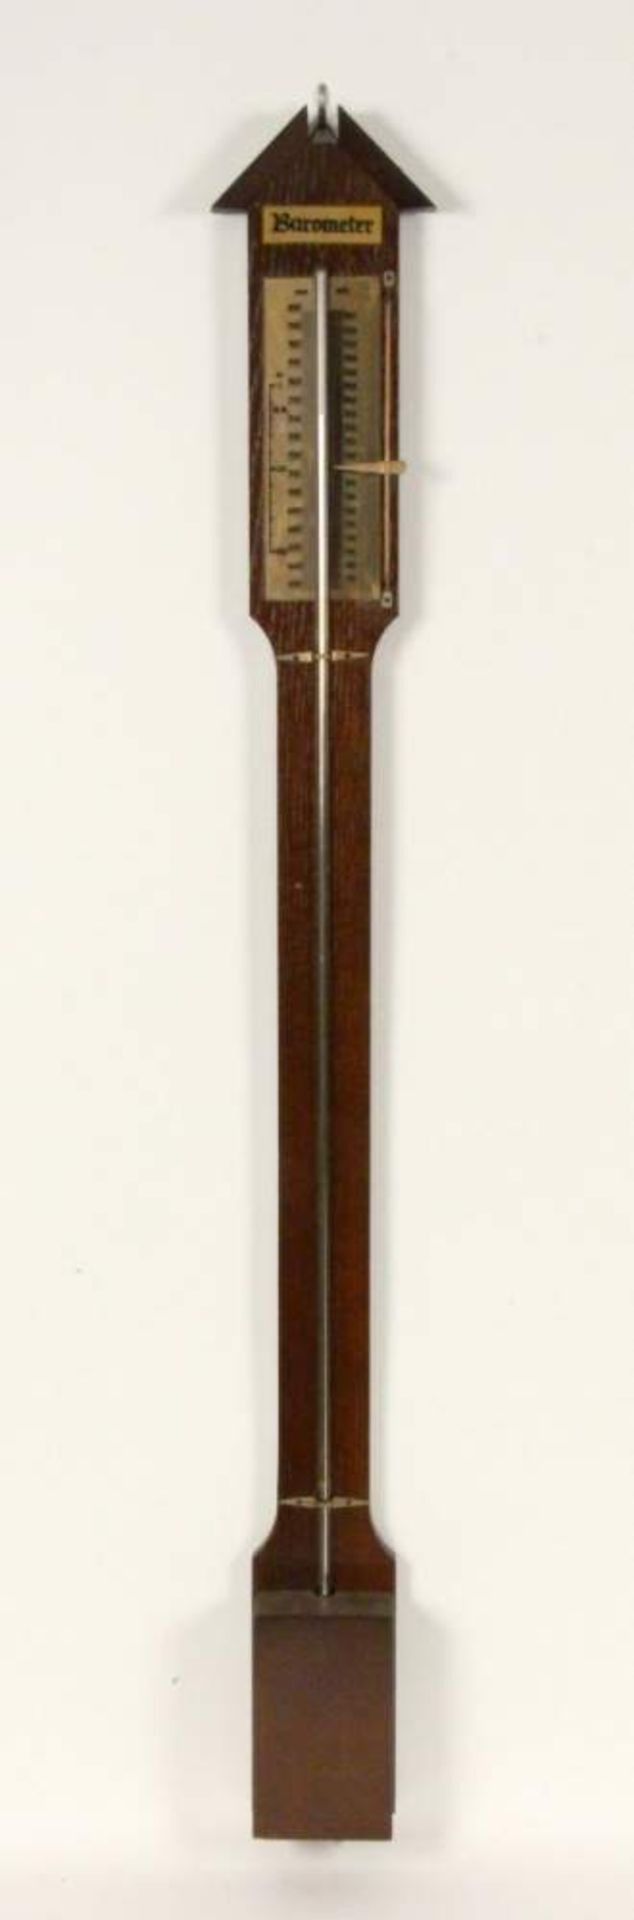 BAROMETERum 1900 Holzgehäuse mit Quecksilbersäule. H.96cmAufrufpreis: 20 EUR

A BAROMETERca. 1900